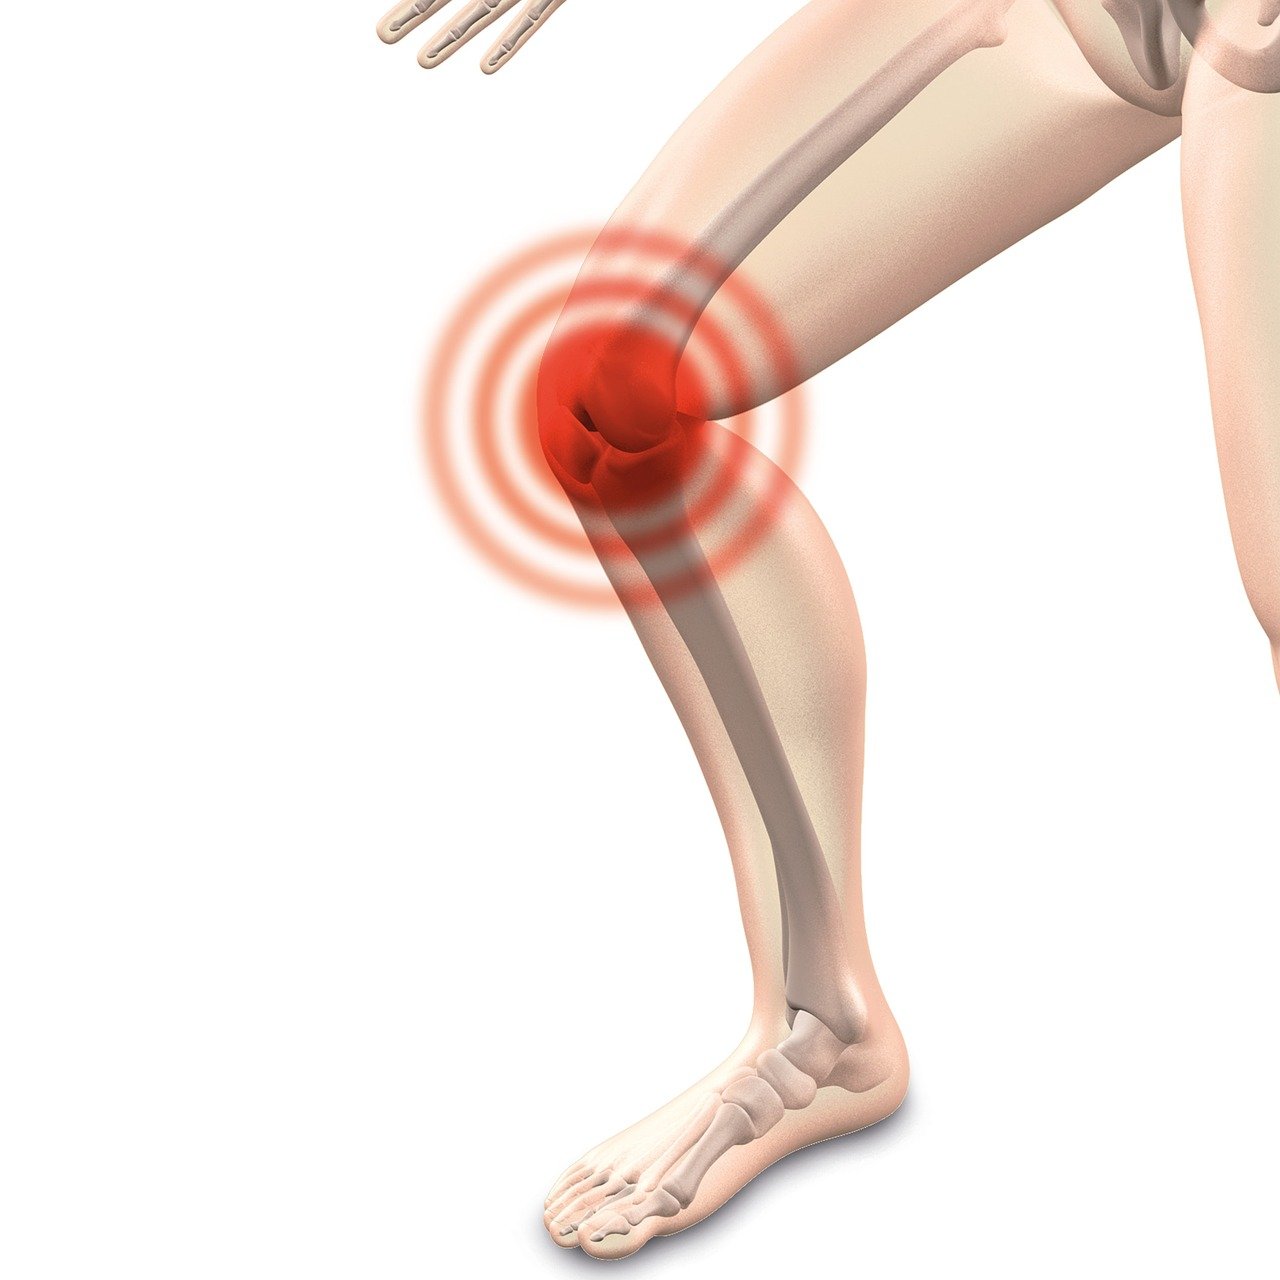 Knee Sprain: Symptoms, Treatment & Recovery